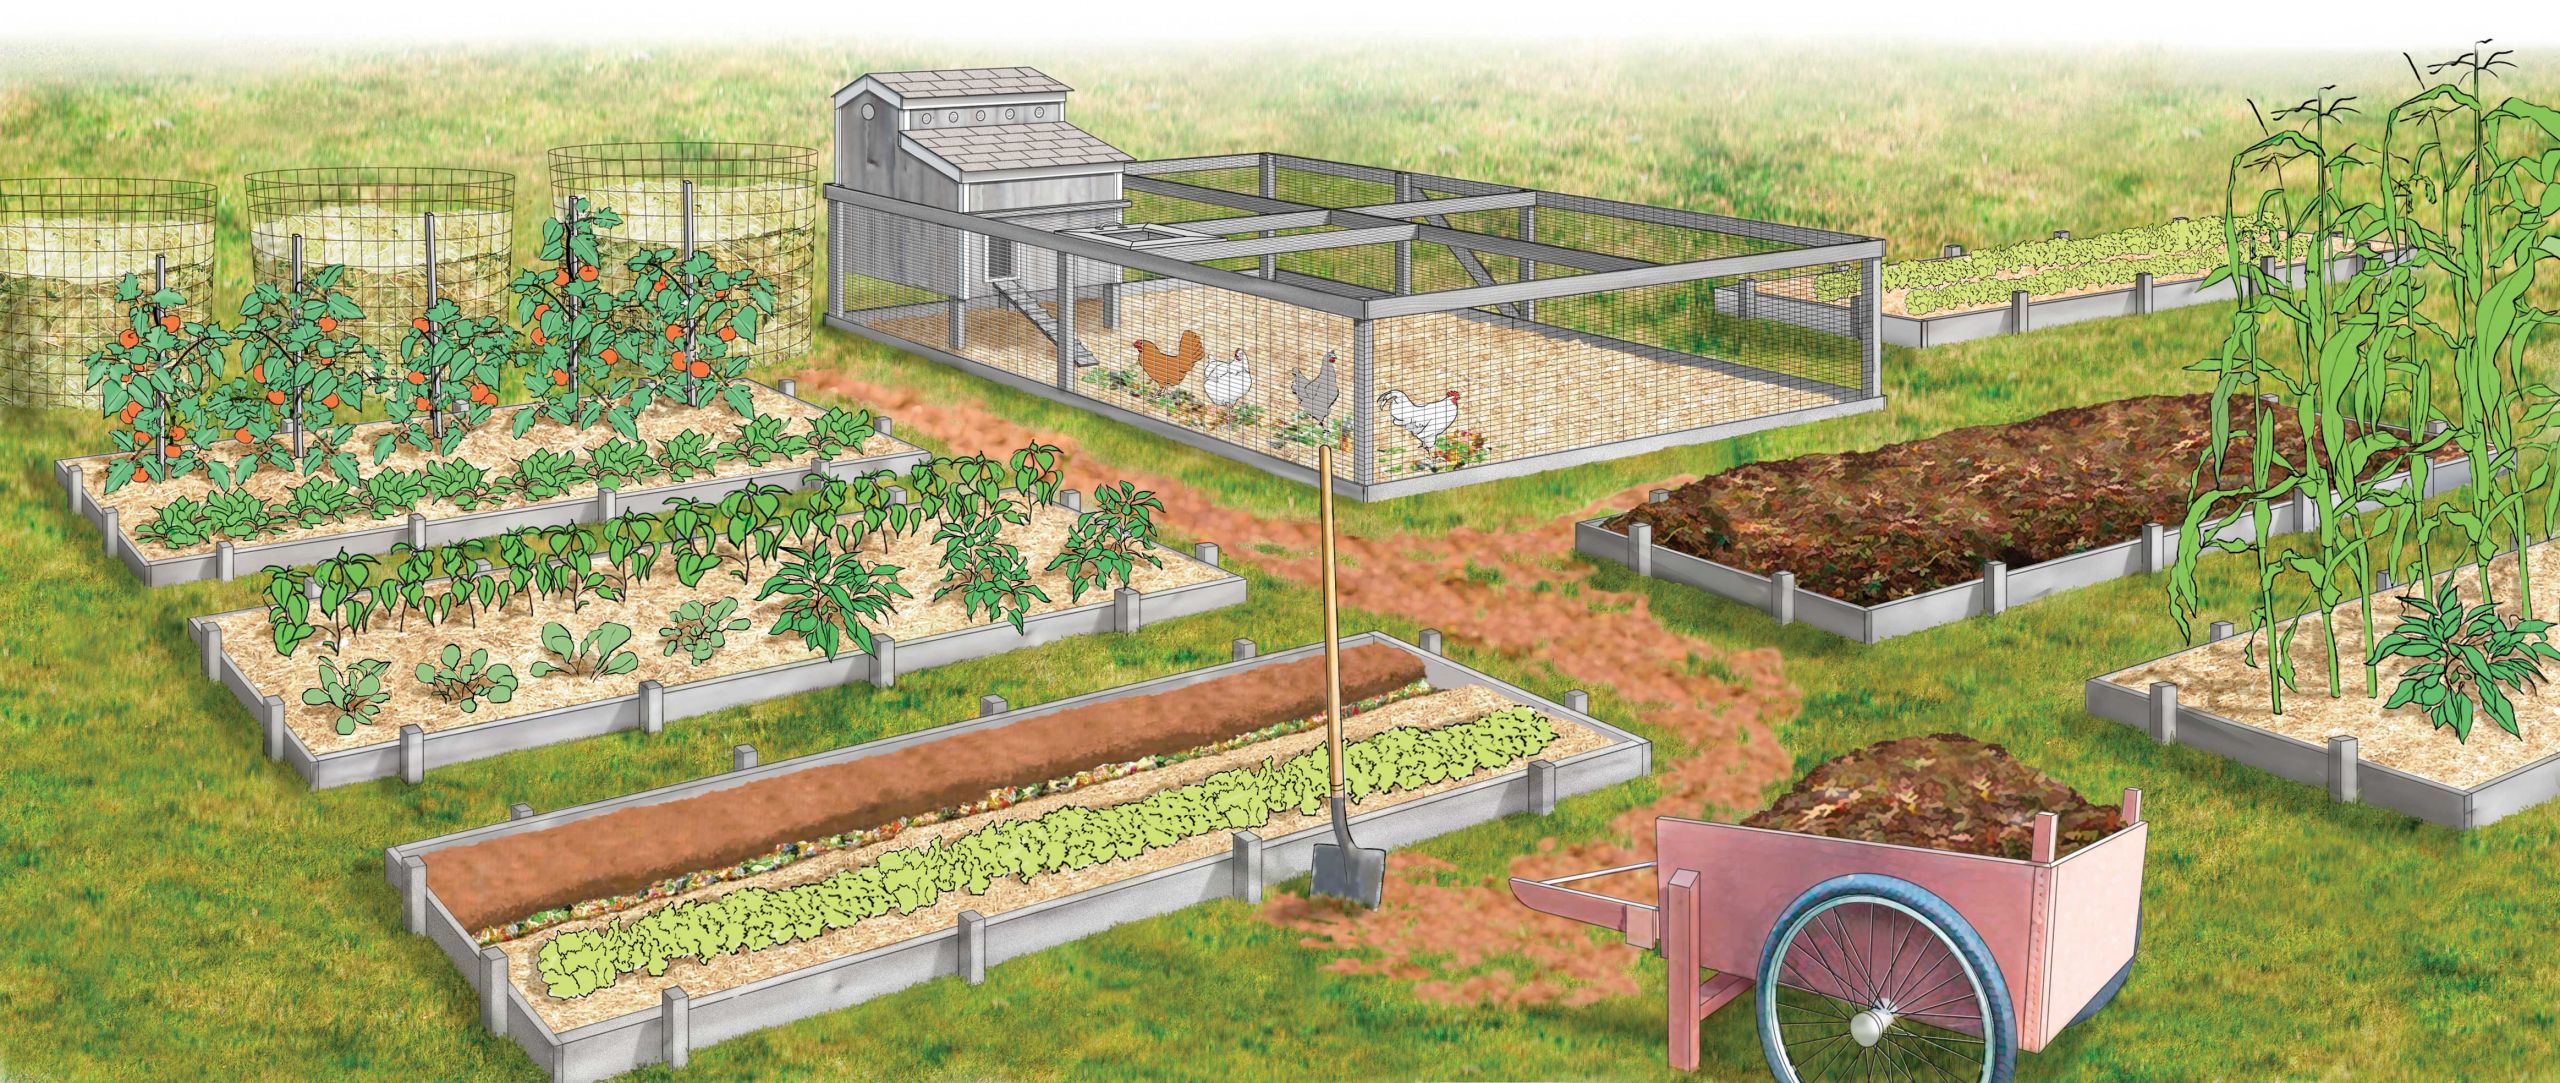 Backyard Farming Ideas
 28 Farm Layout Design Ideas to Inspire Your Homestead Dream